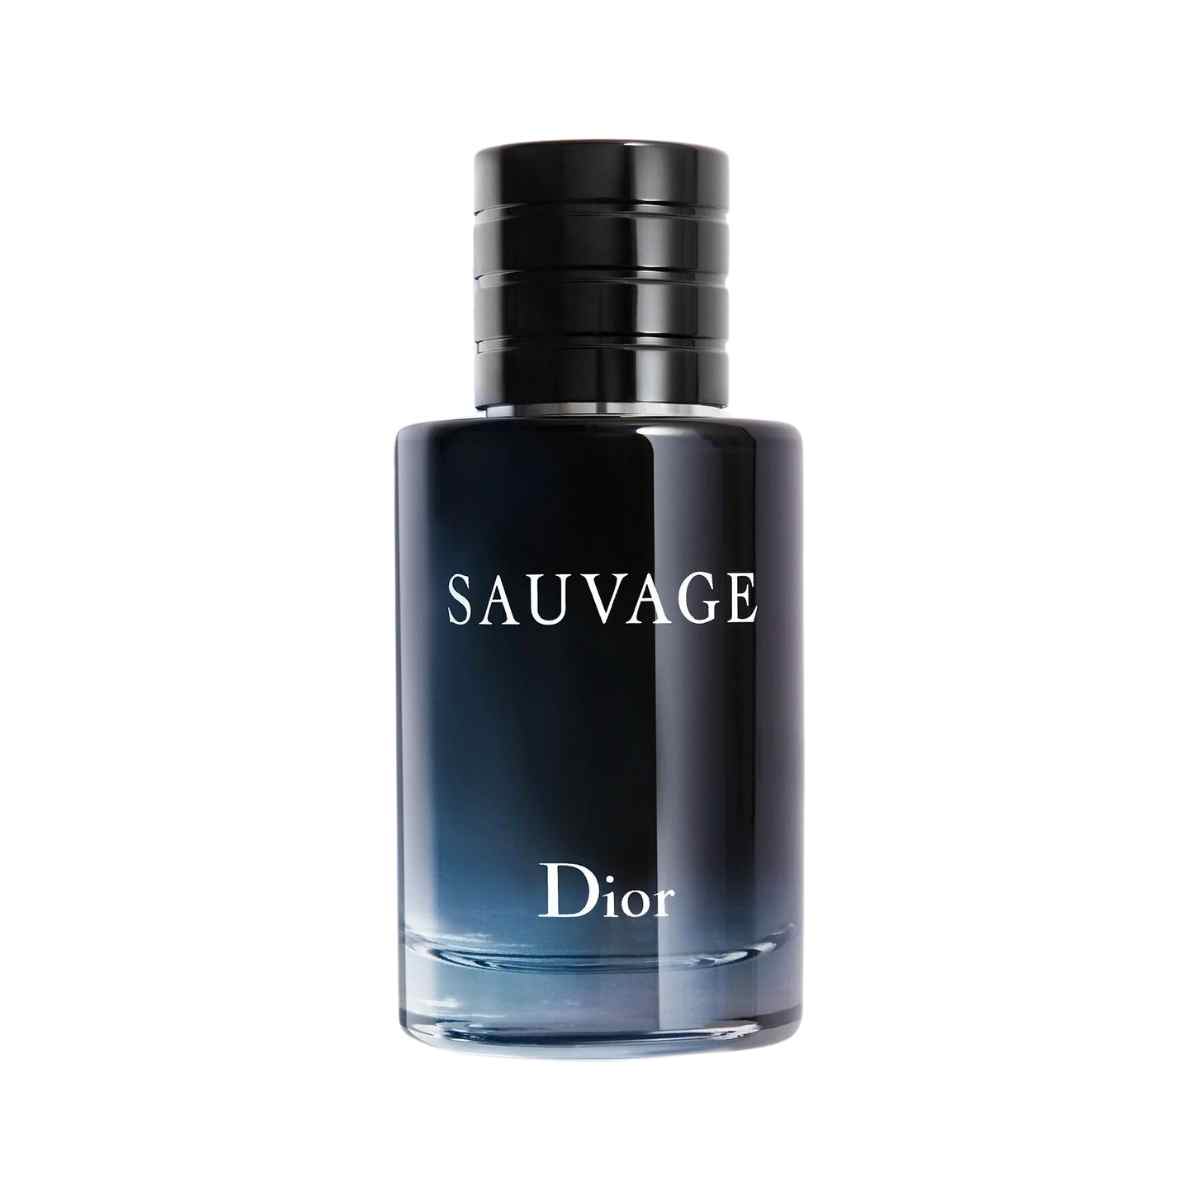 dior perfumes price best seller philippines